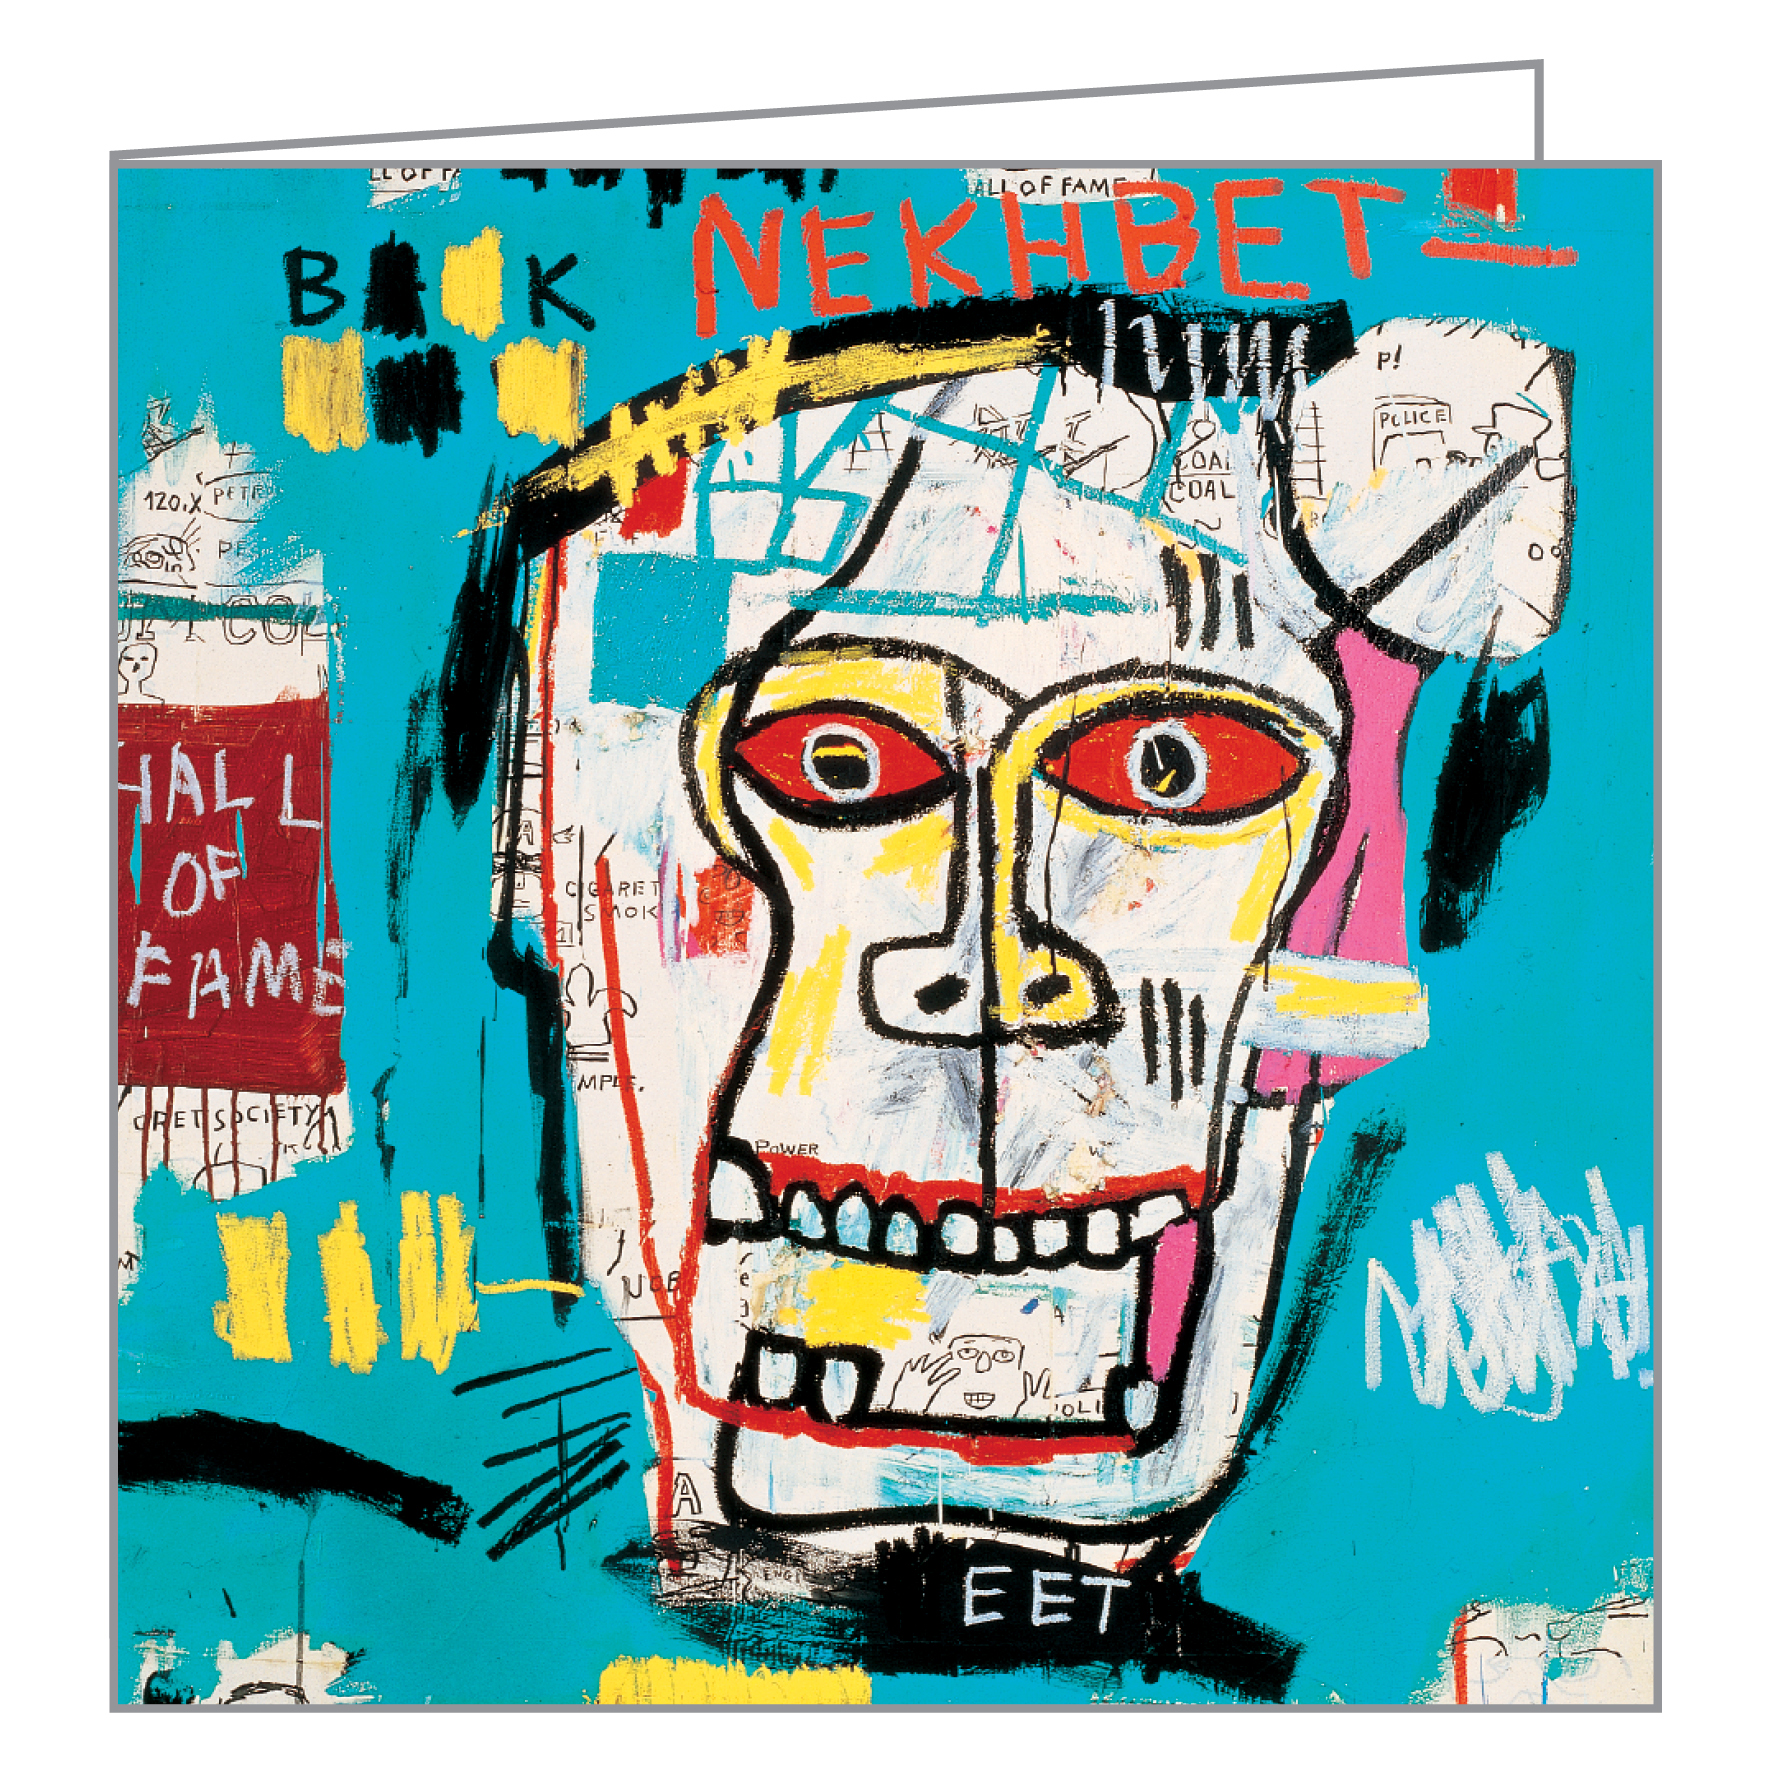 Jean-Michel Basquiat's skull graffiti artwork, on notecard box, by teNeues stationery.